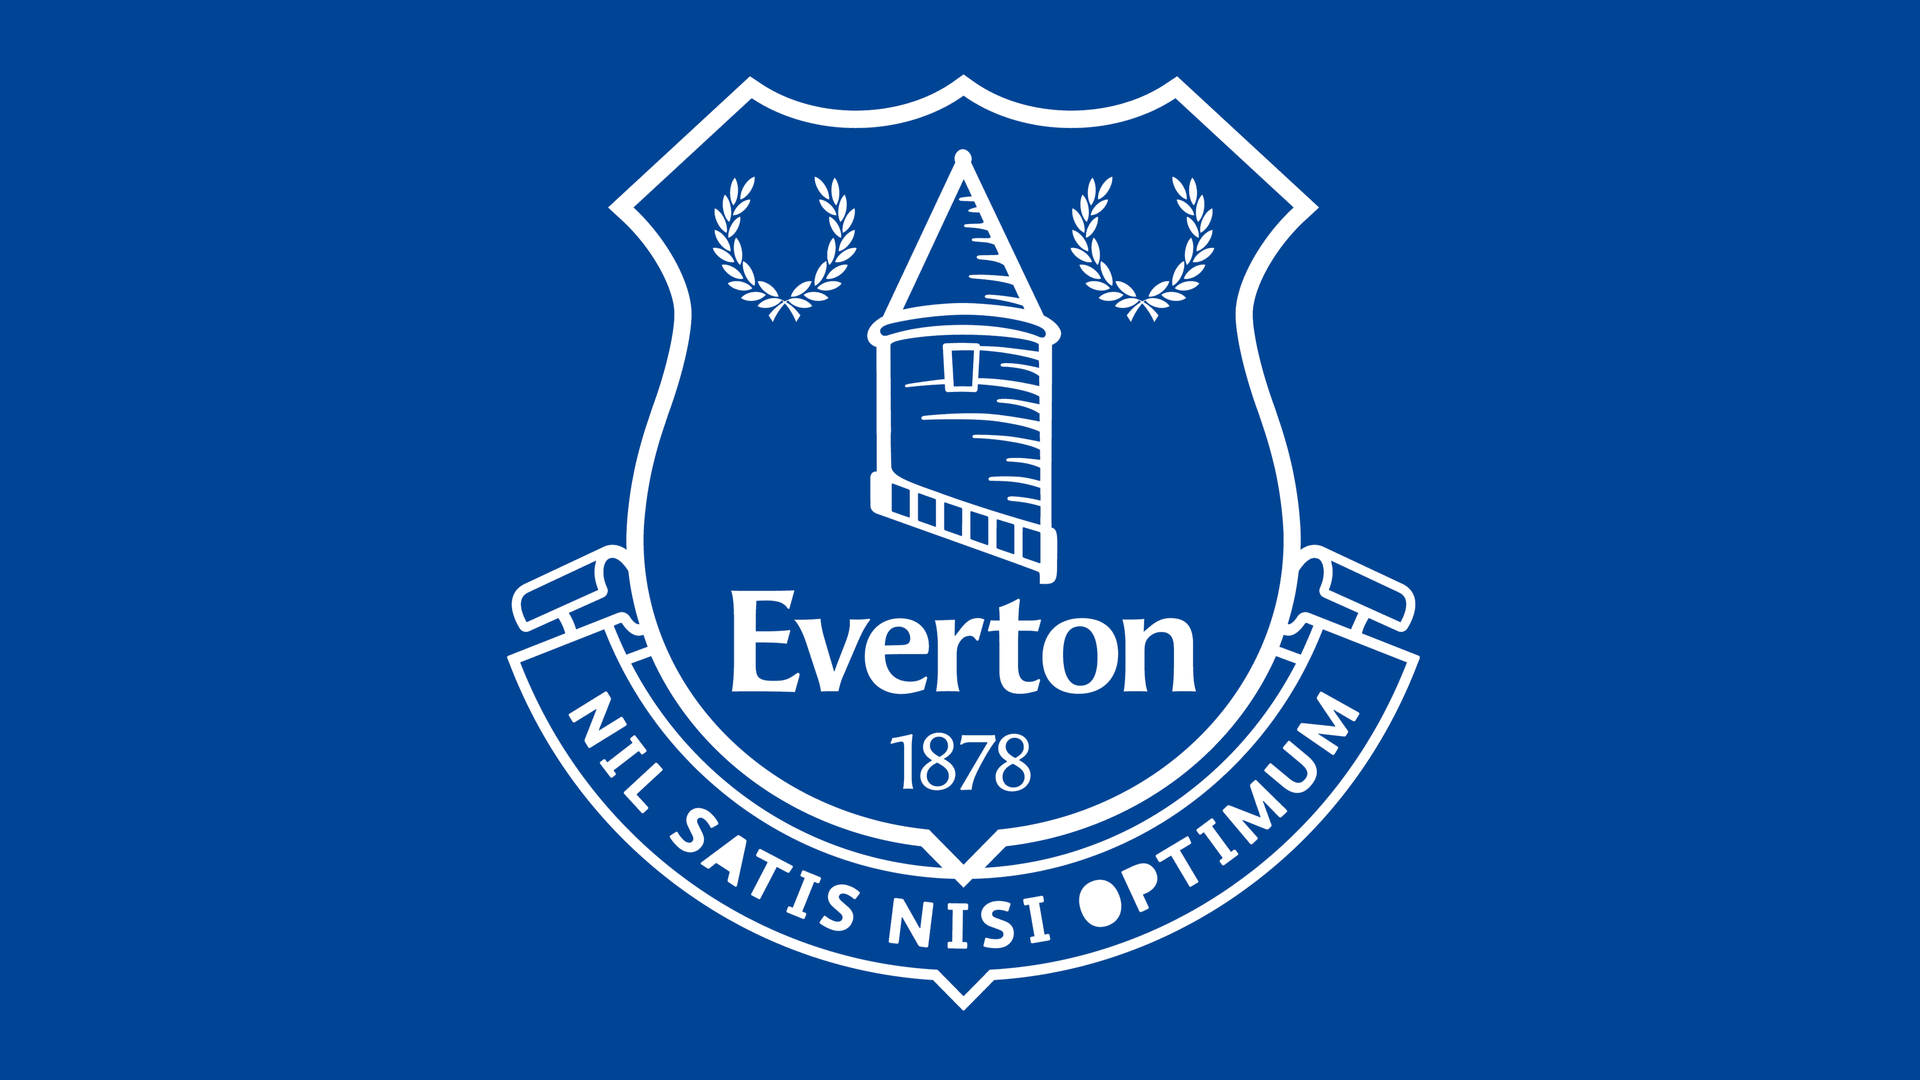 Evertonf.c Emblem In Blau. Wallpaper